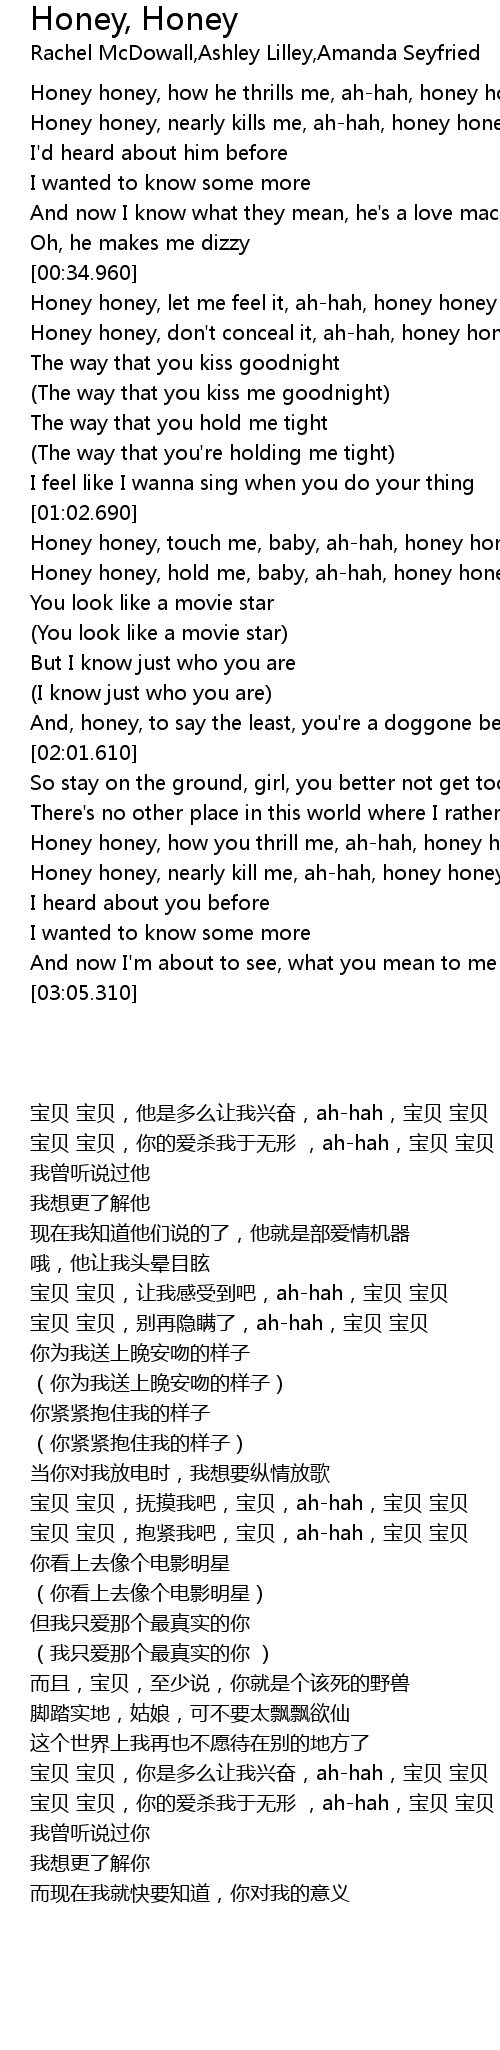 Puodelis Du Laipsniai Epizodas Honey Don T Love Me Lyrics Florencepoetssociety Org